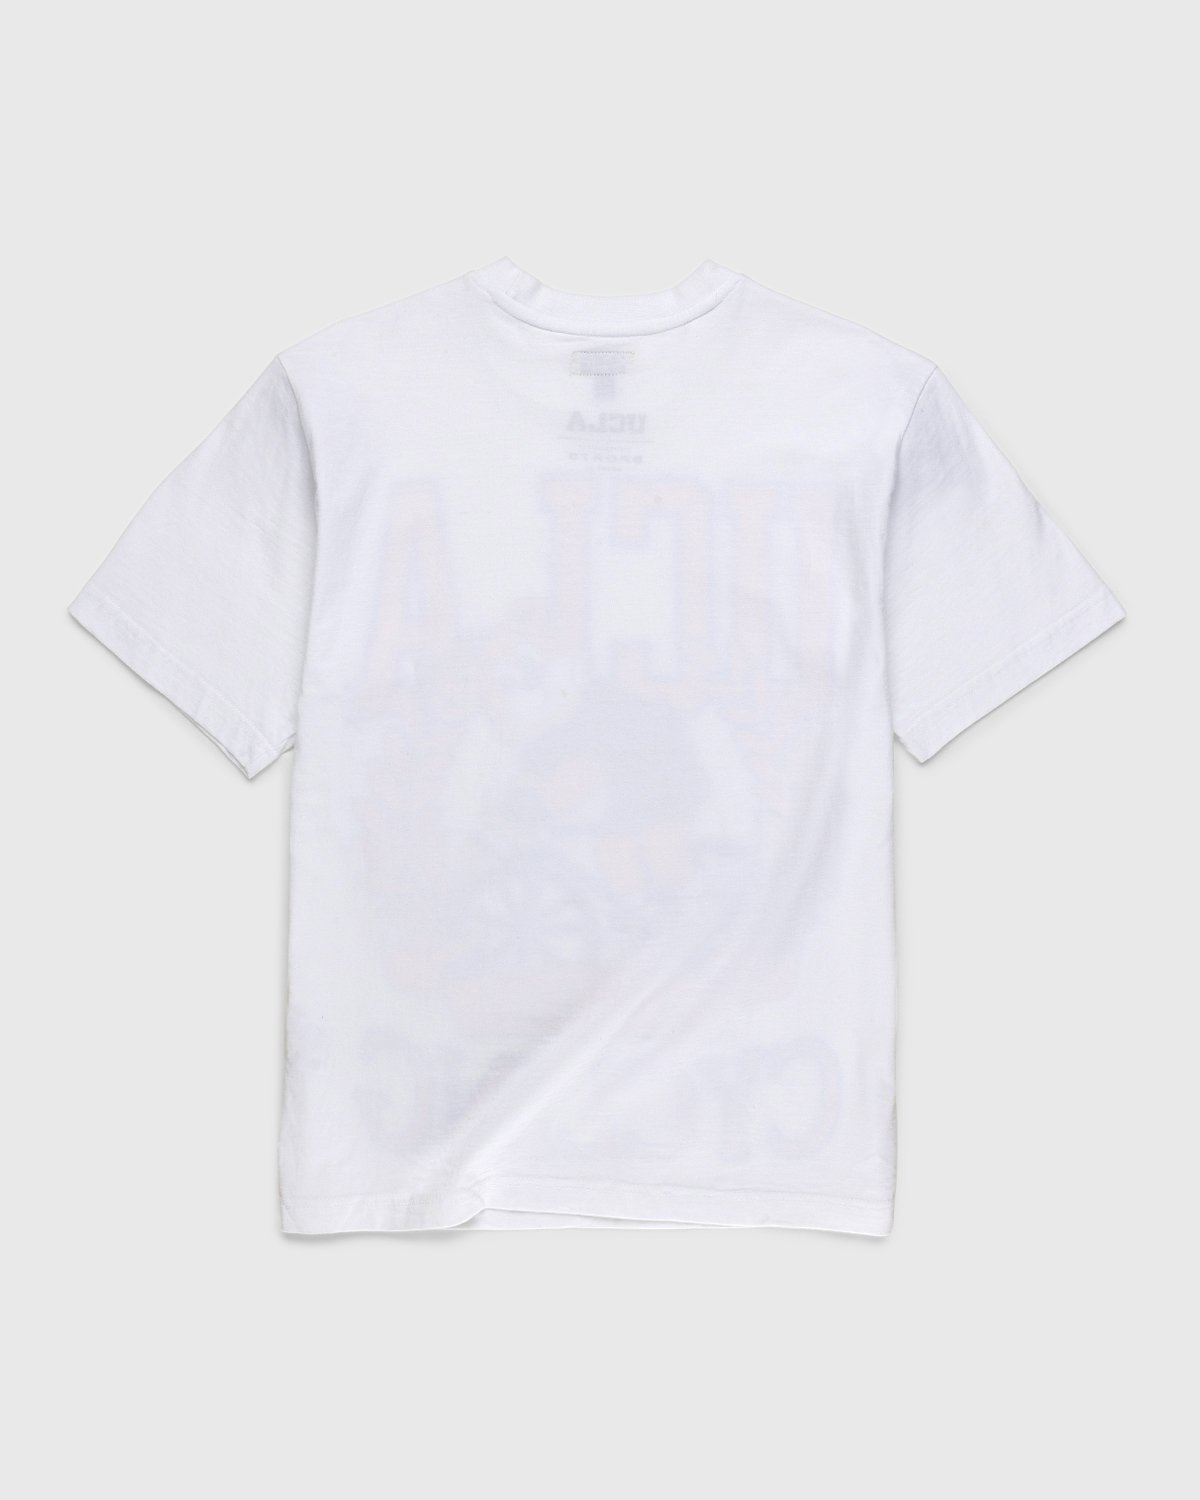 Market x UCLA x Highsnobiety - HS Sports Bruin T-Shirt White - Clothing - White - Image 2